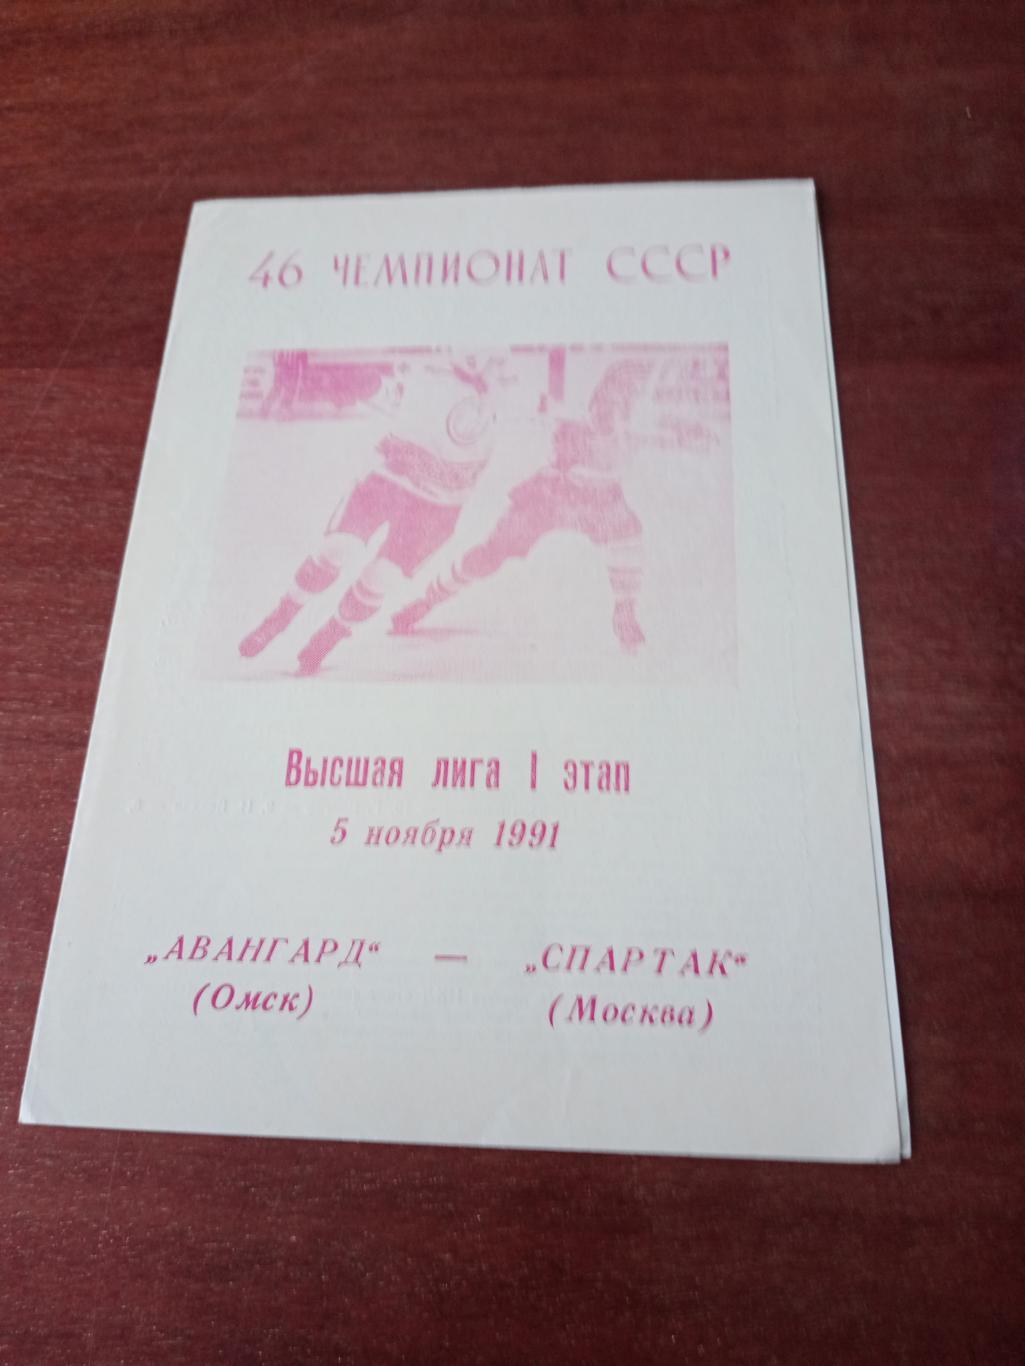 Авангард Омск - Спартак Москва. 5 ноября 1991 год